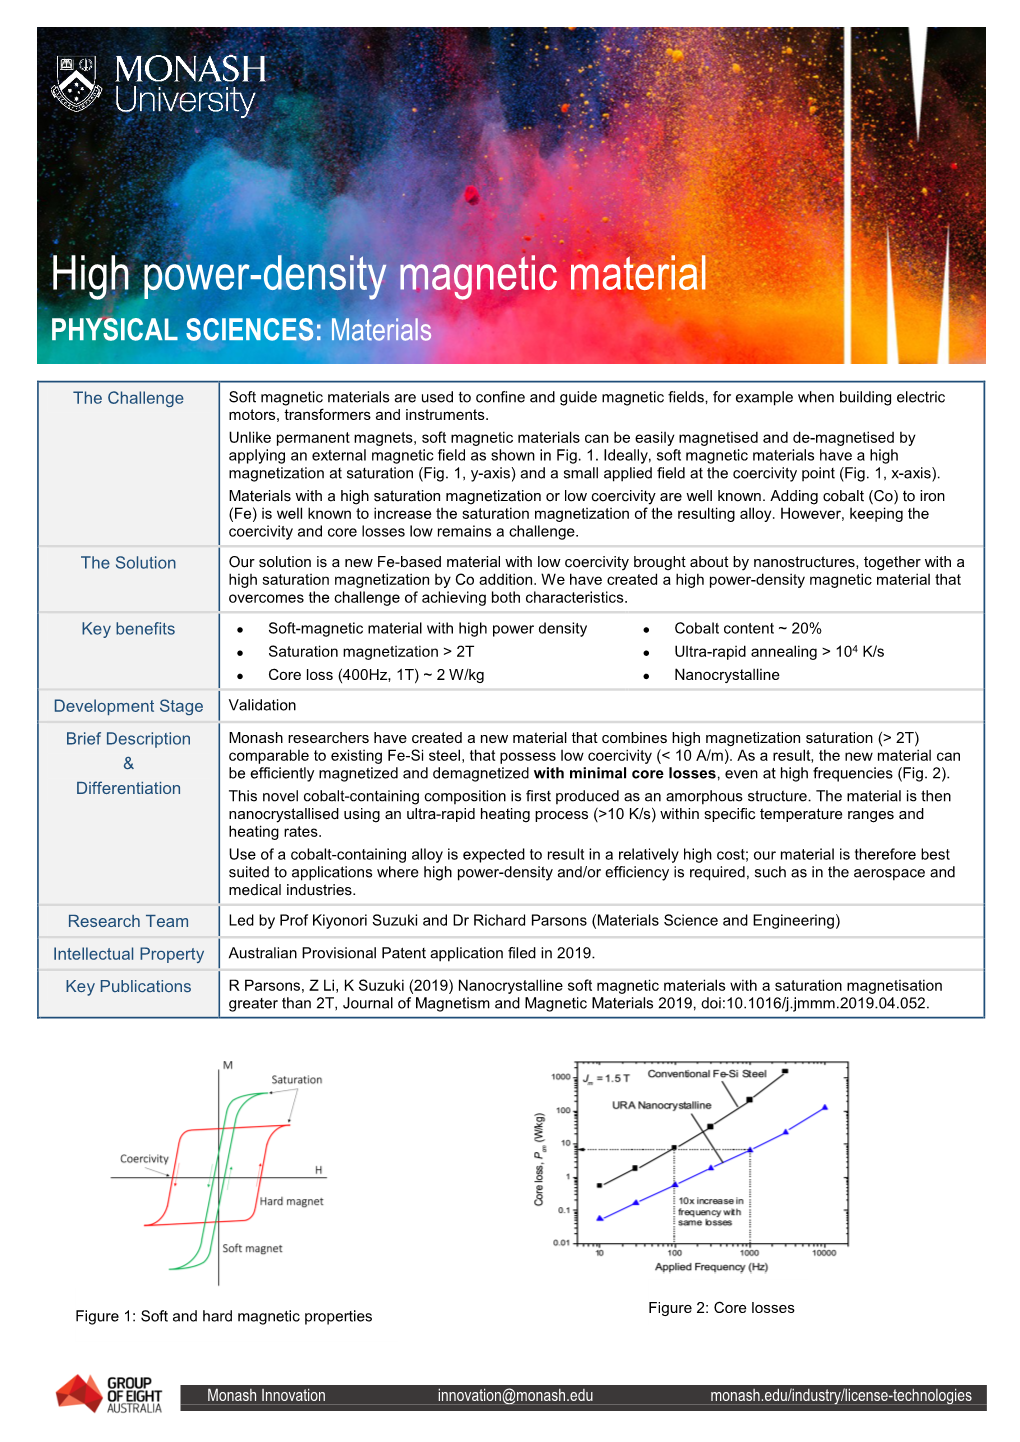 High Power-Density Magnetic Material